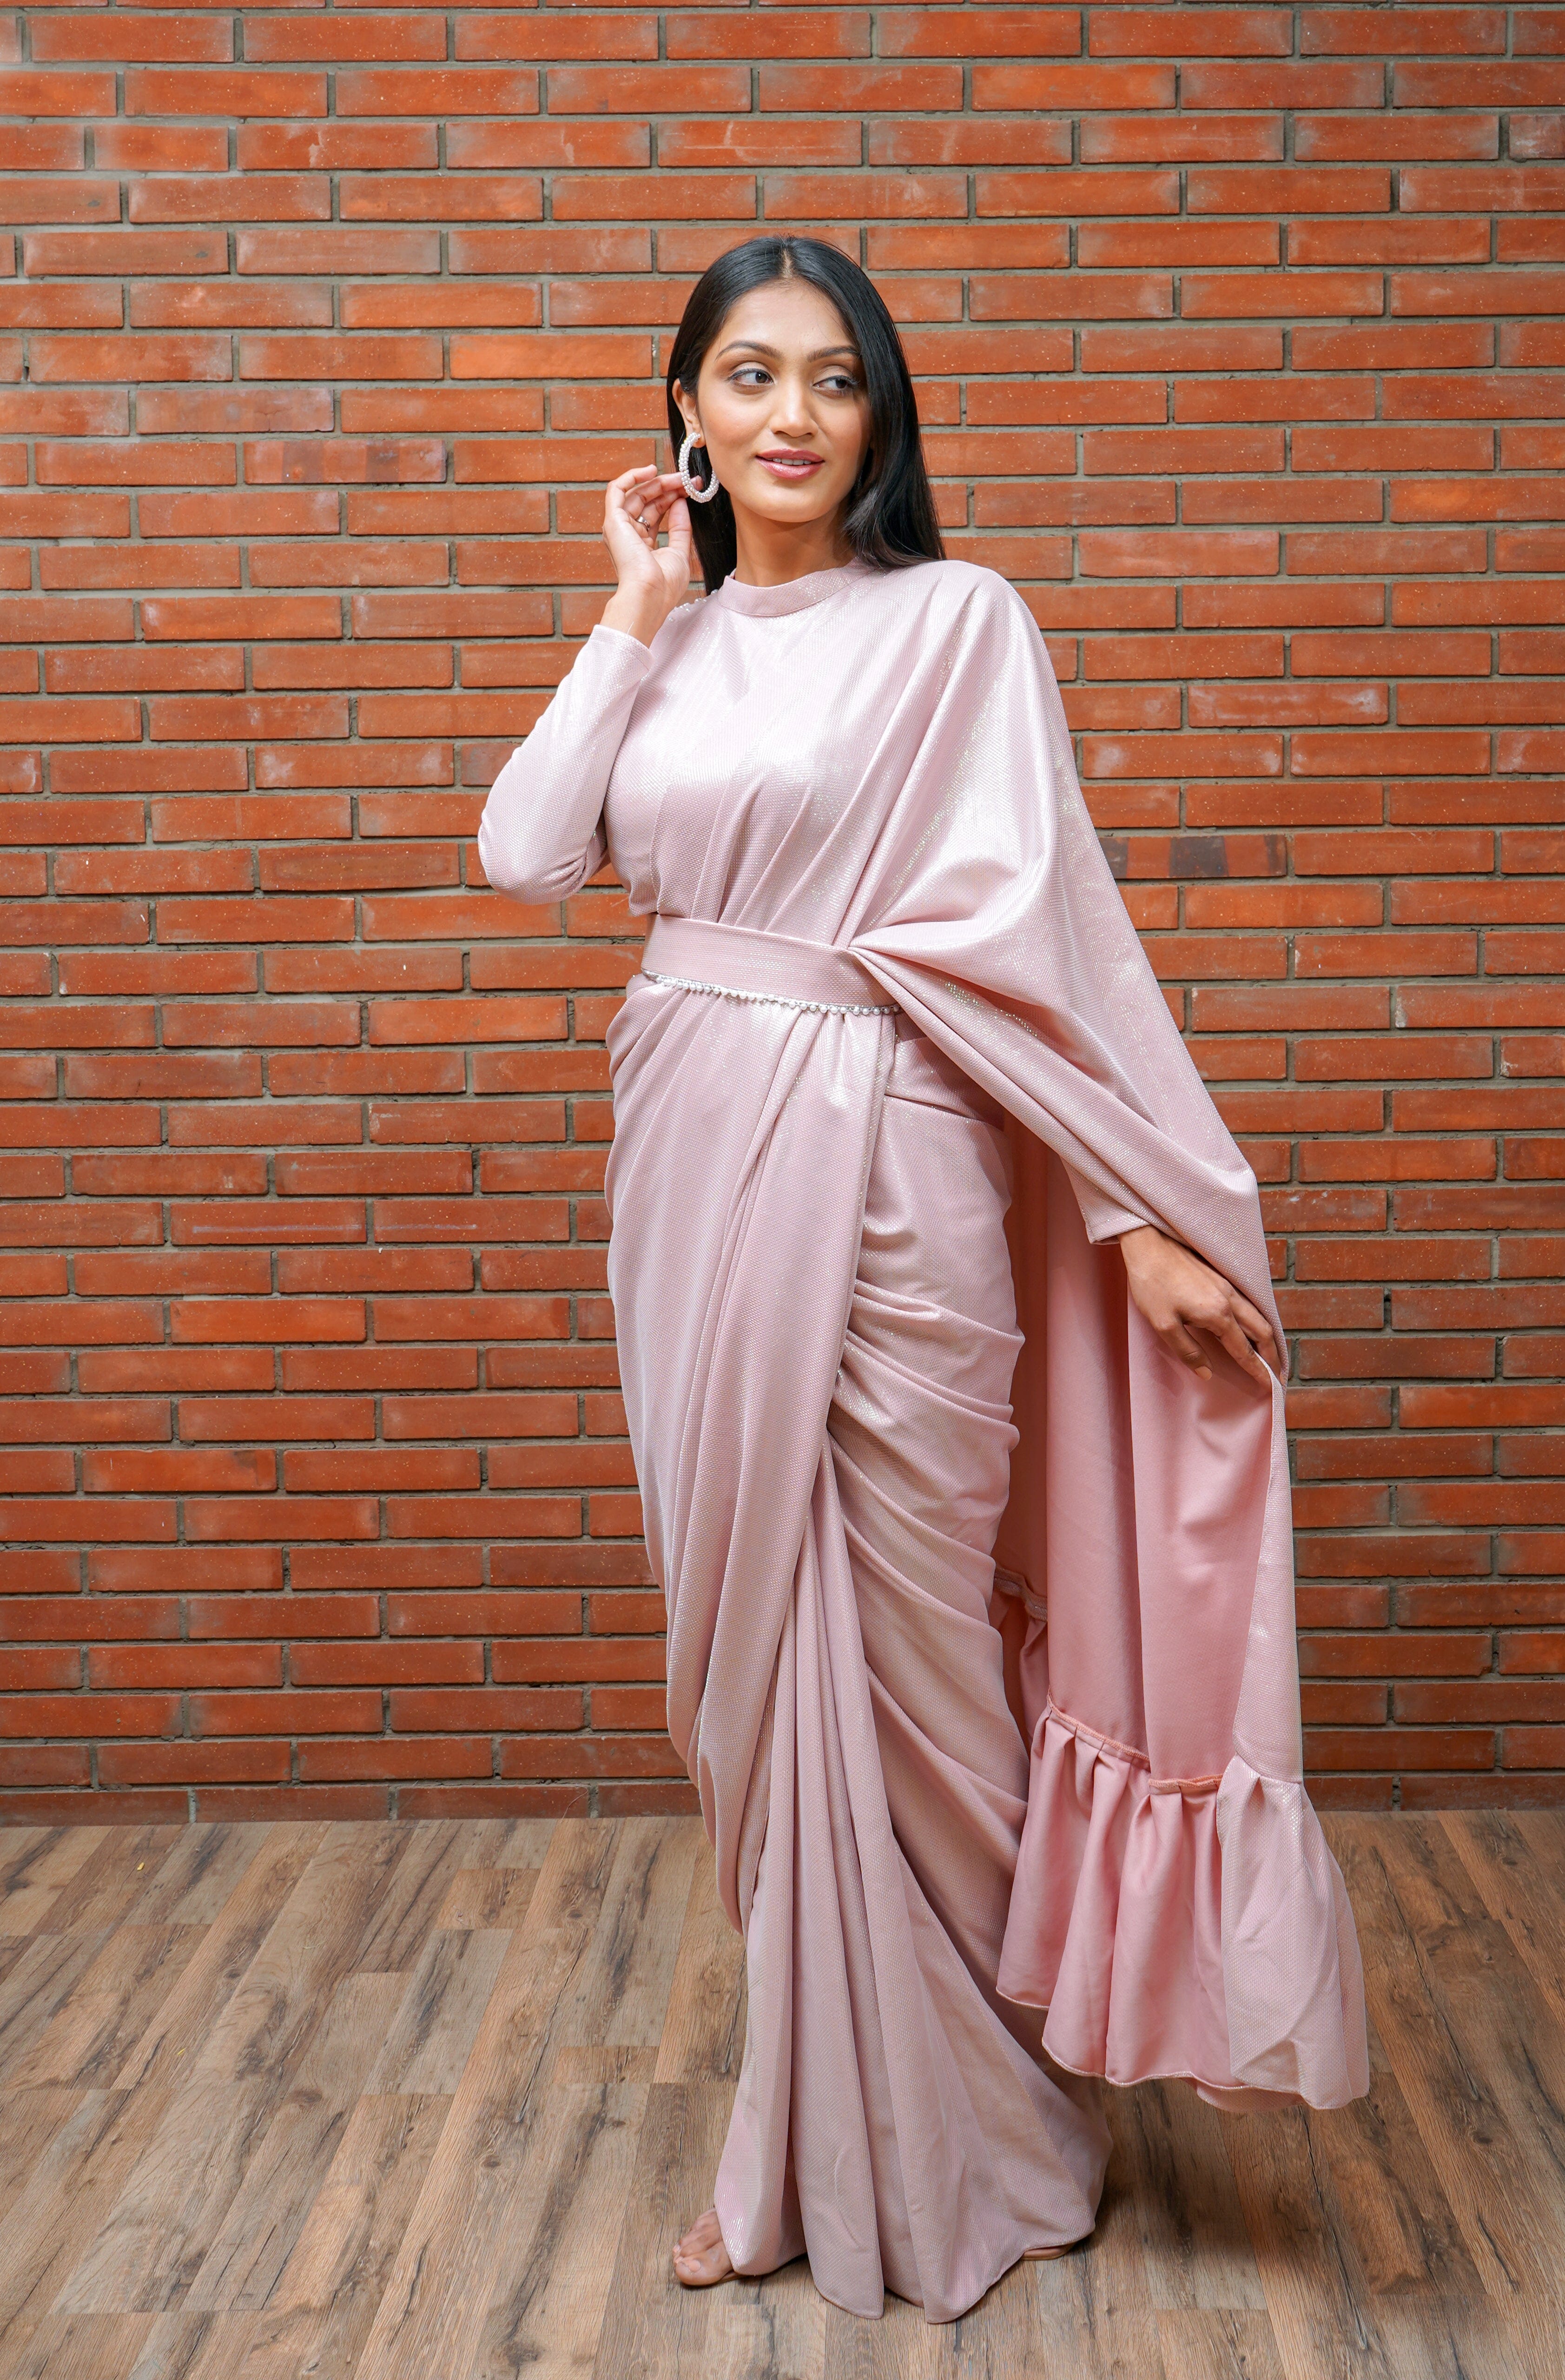 Pre-draped Pink Glitter Saree Sarees Aynaa 